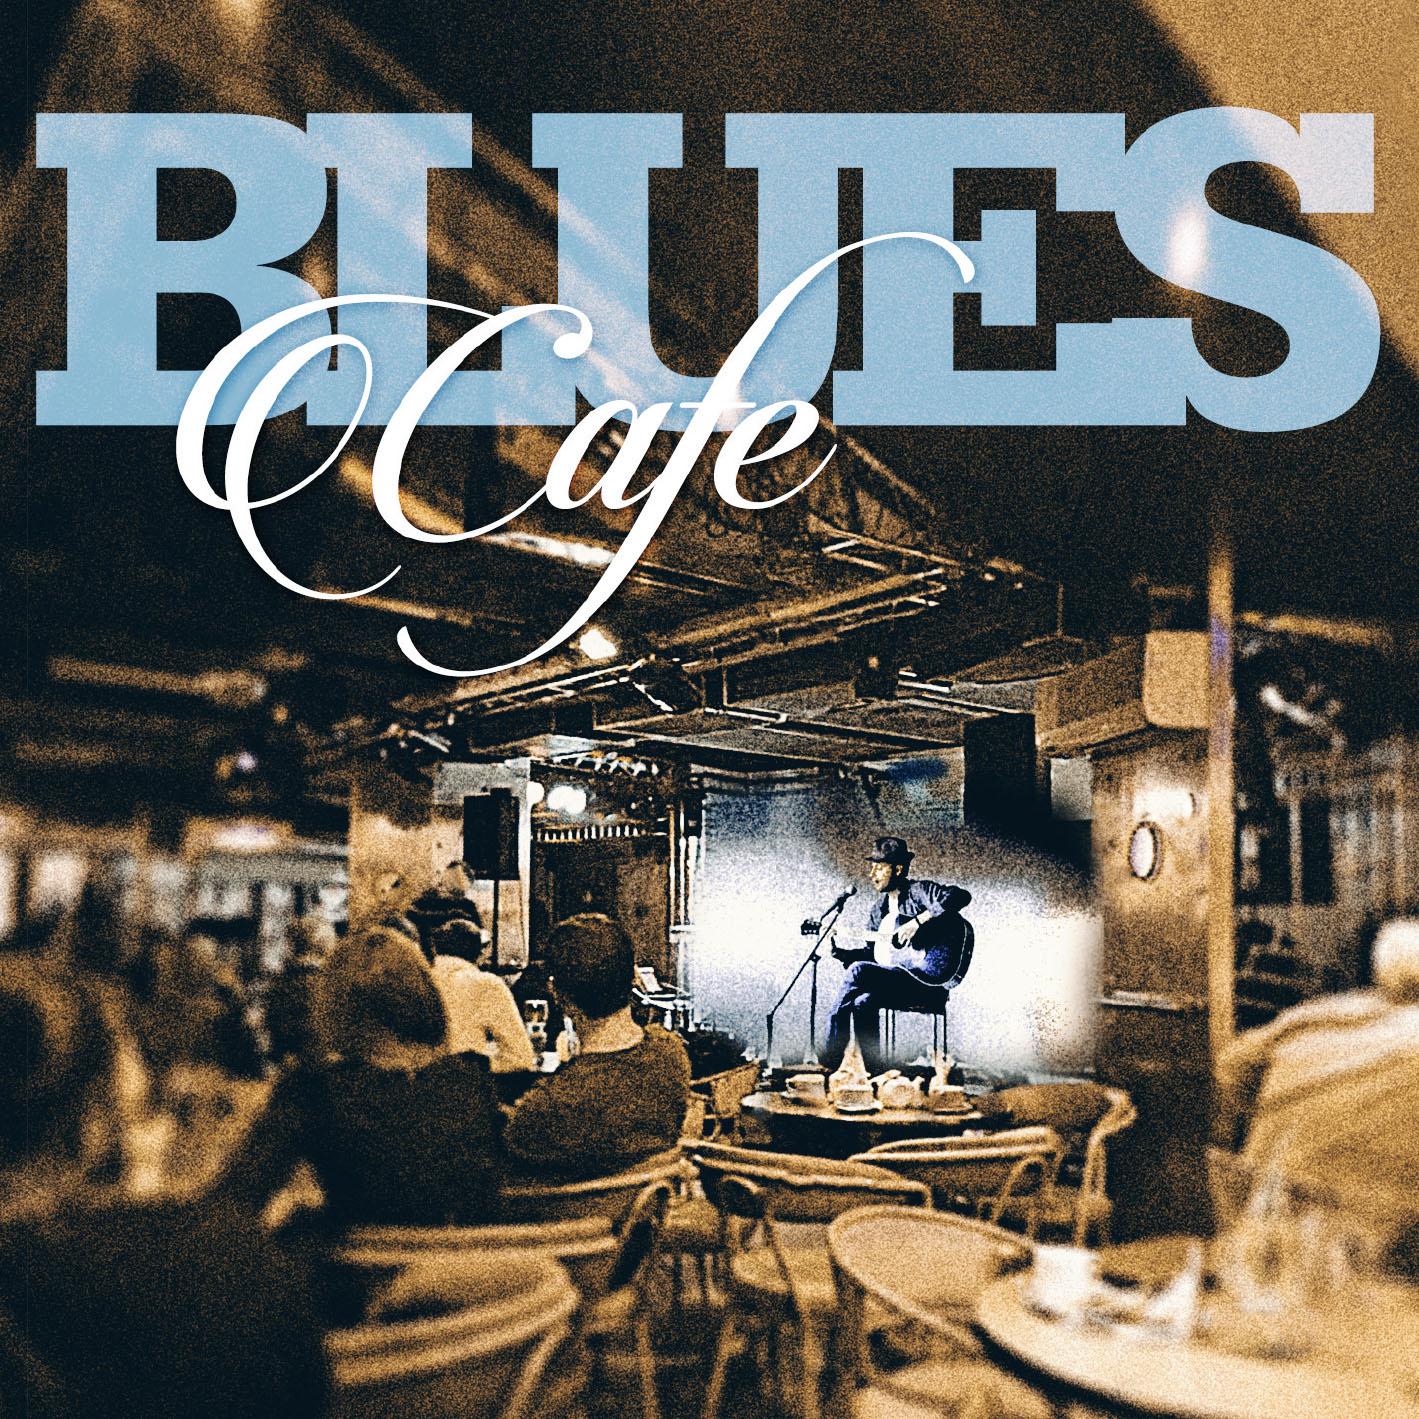 BLUES CAFE 2CD